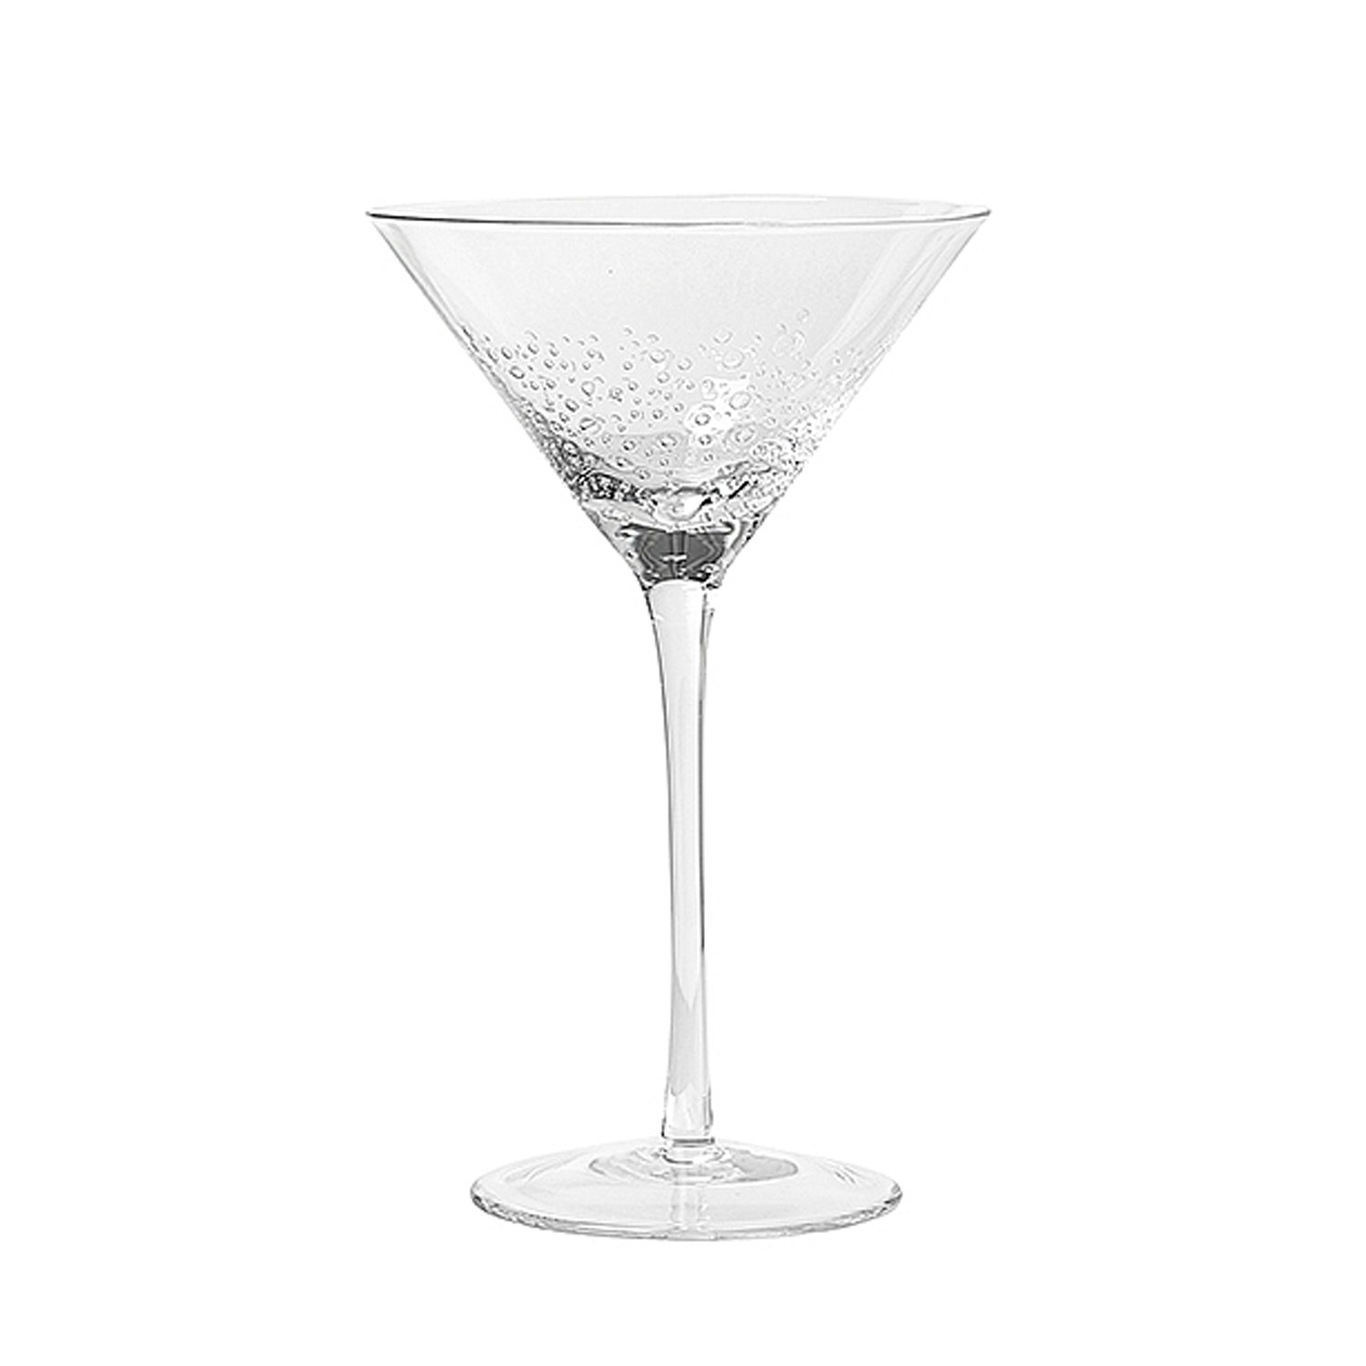 https://royaldesign.com/image/2/broste-copenhagen-bubble-martini-glass-20-cl-0?w=800&quality=80